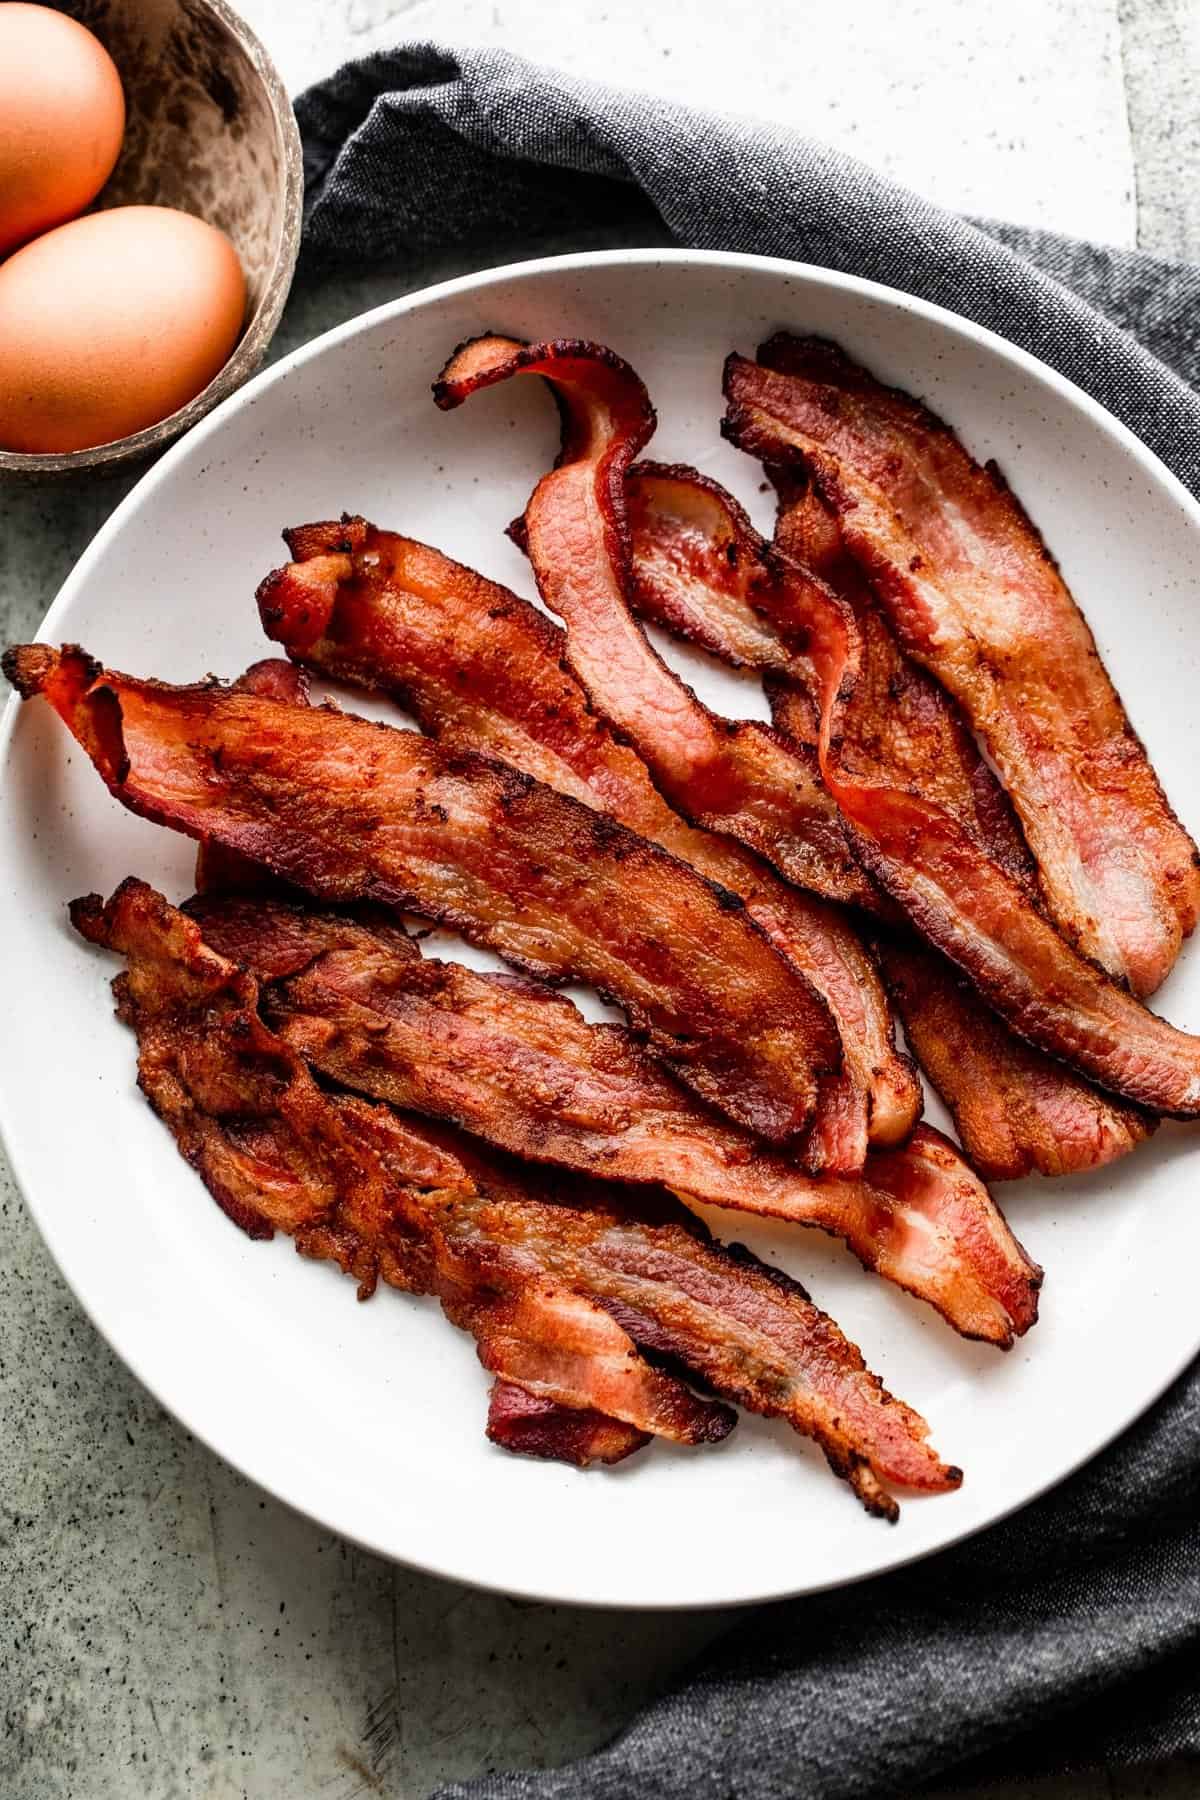 https://diethood.com/wp-content/uploads/2022/05/air-fryer-bacon-7.jpg